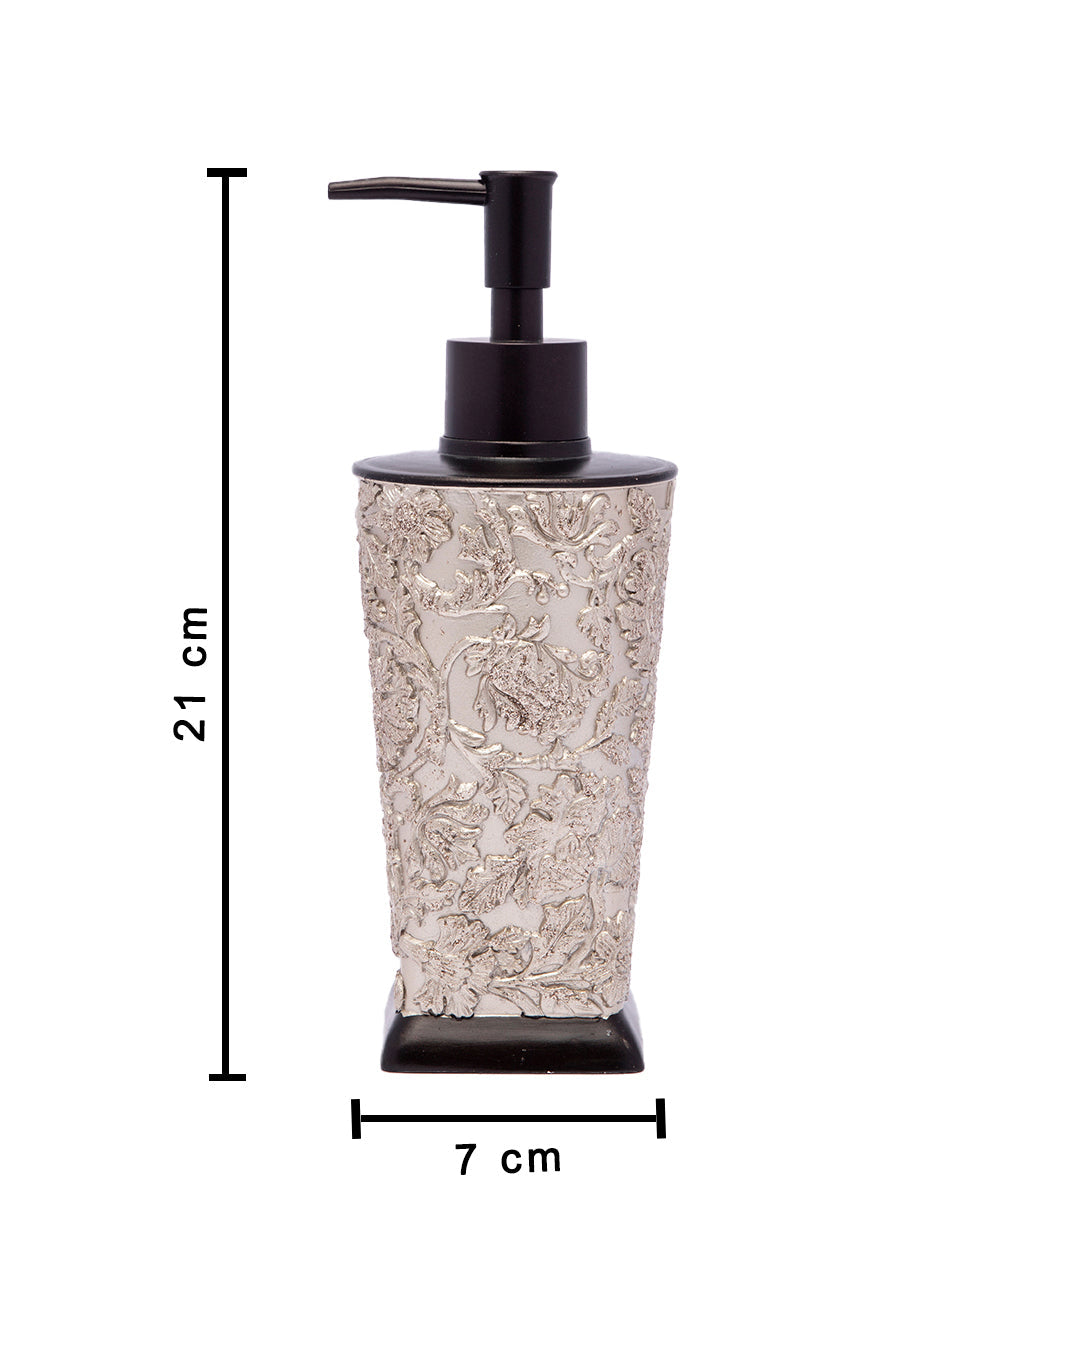 VON CASA Roman Soap Dispenser